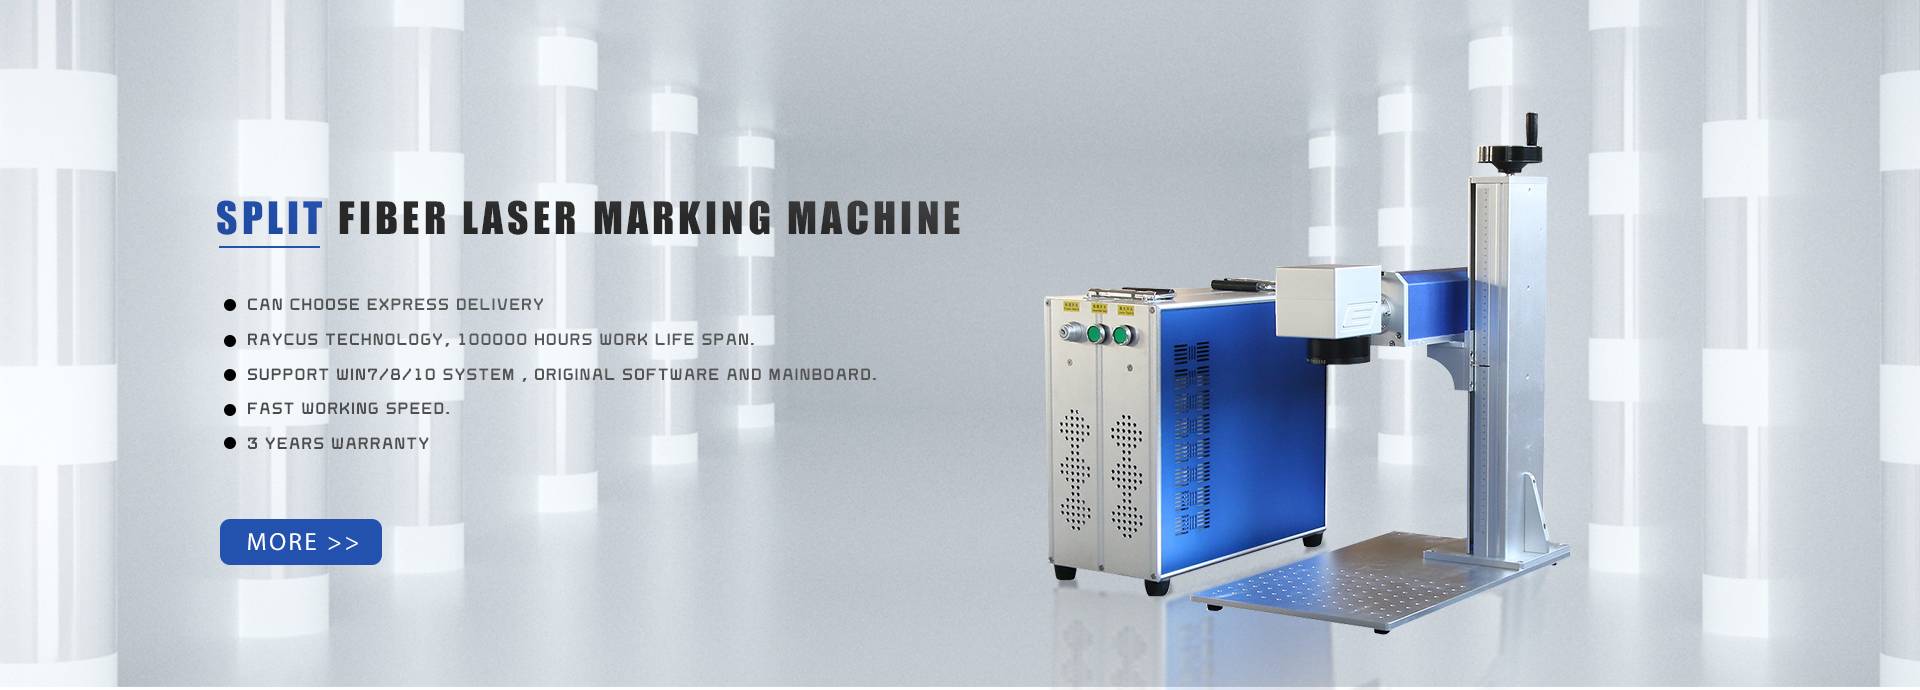 Split fiber laser marking machine